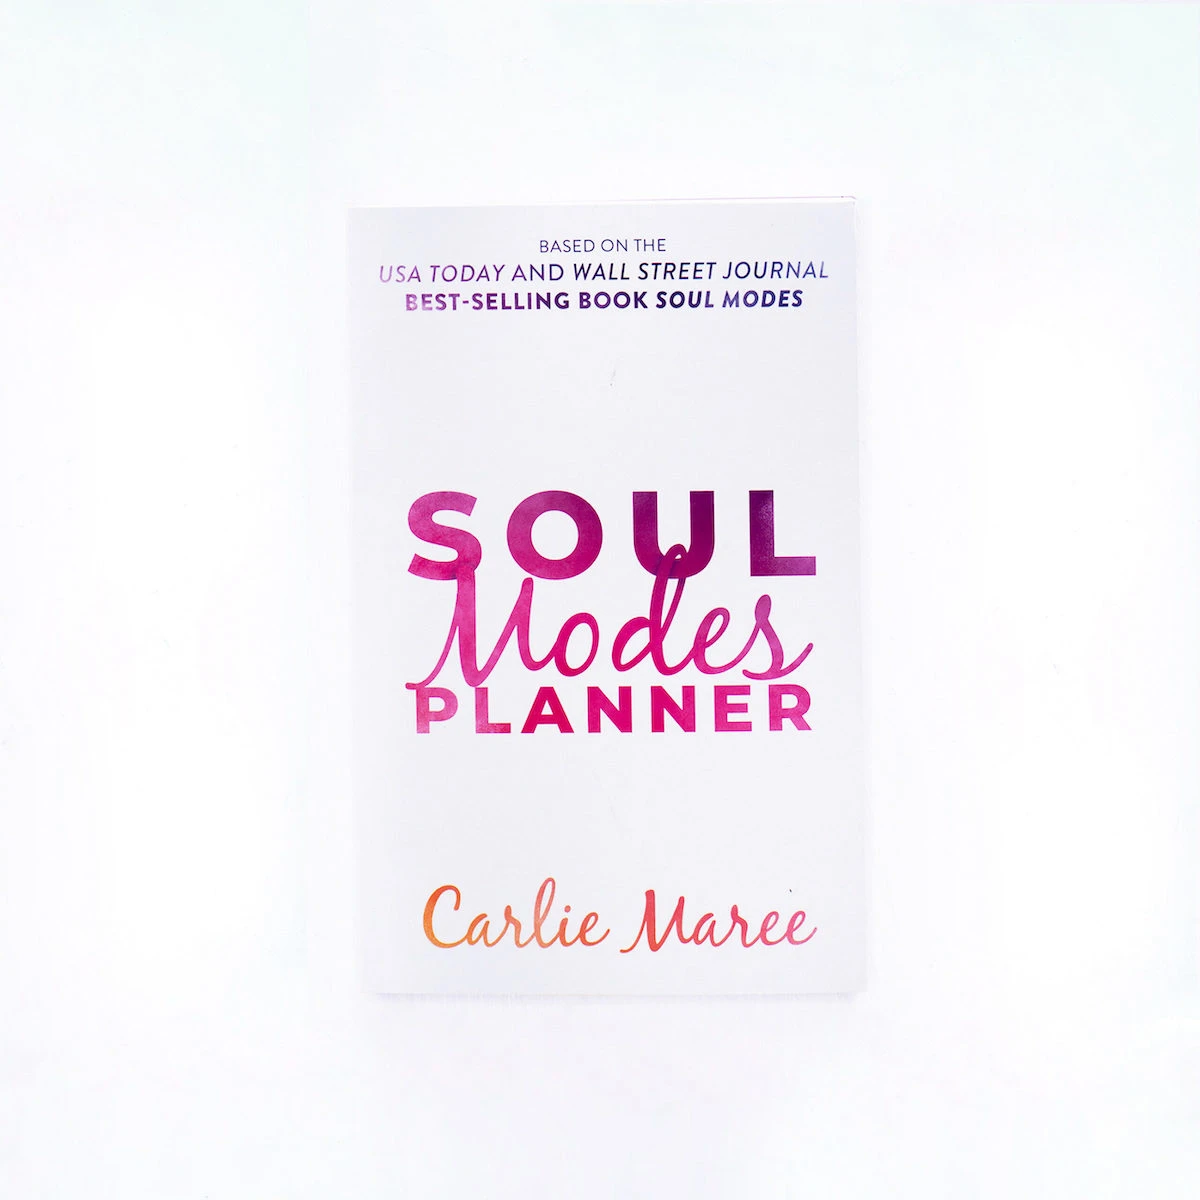 Soul modes planner